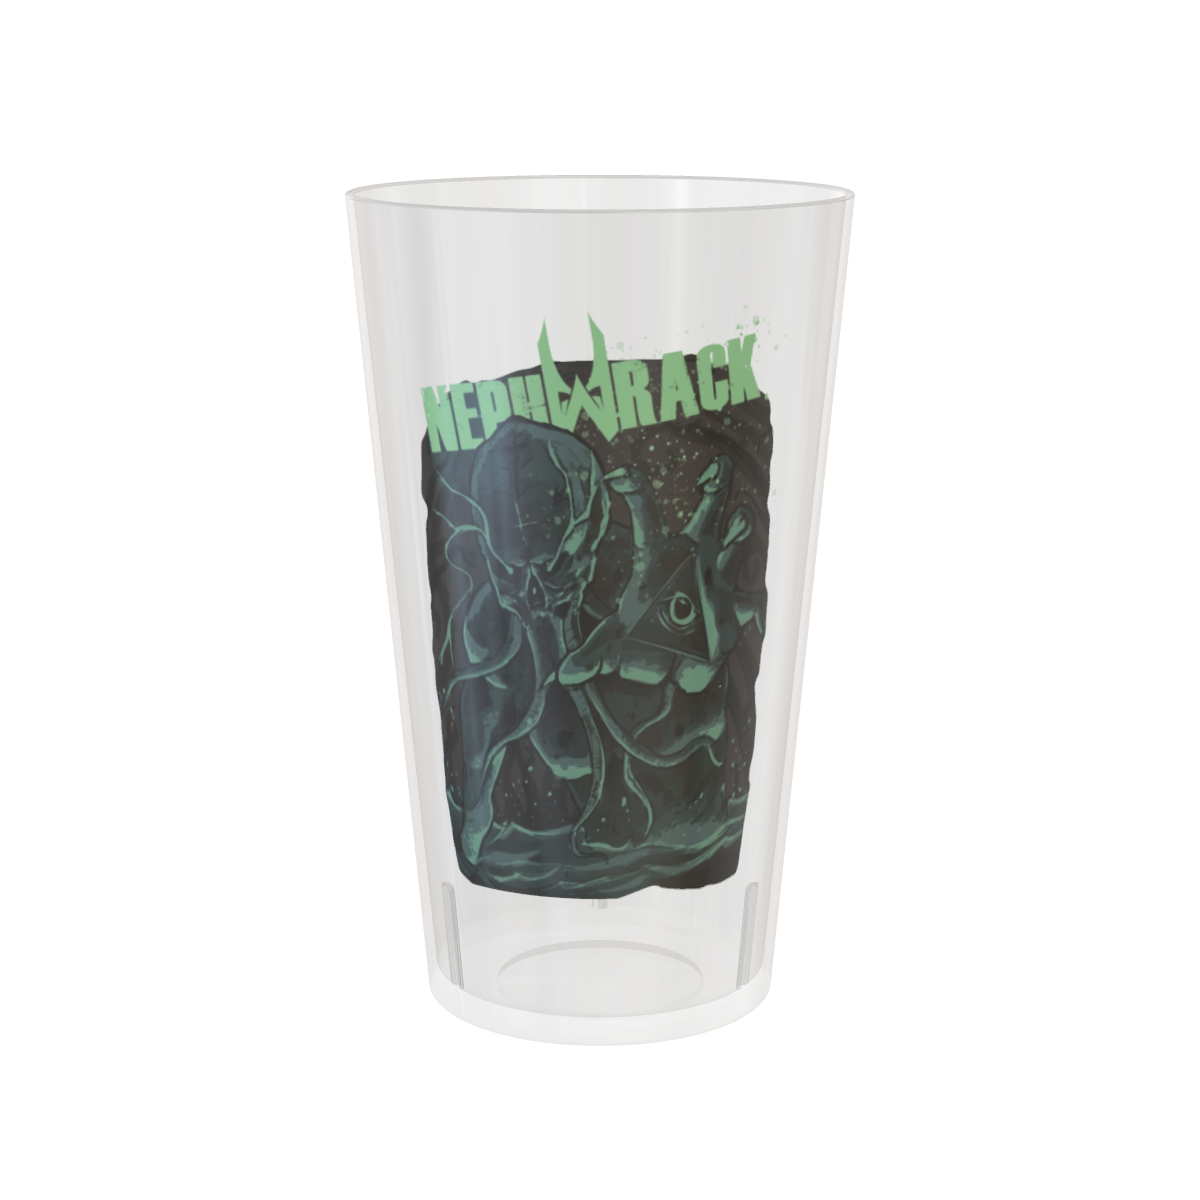 Leviathan Cup - $10